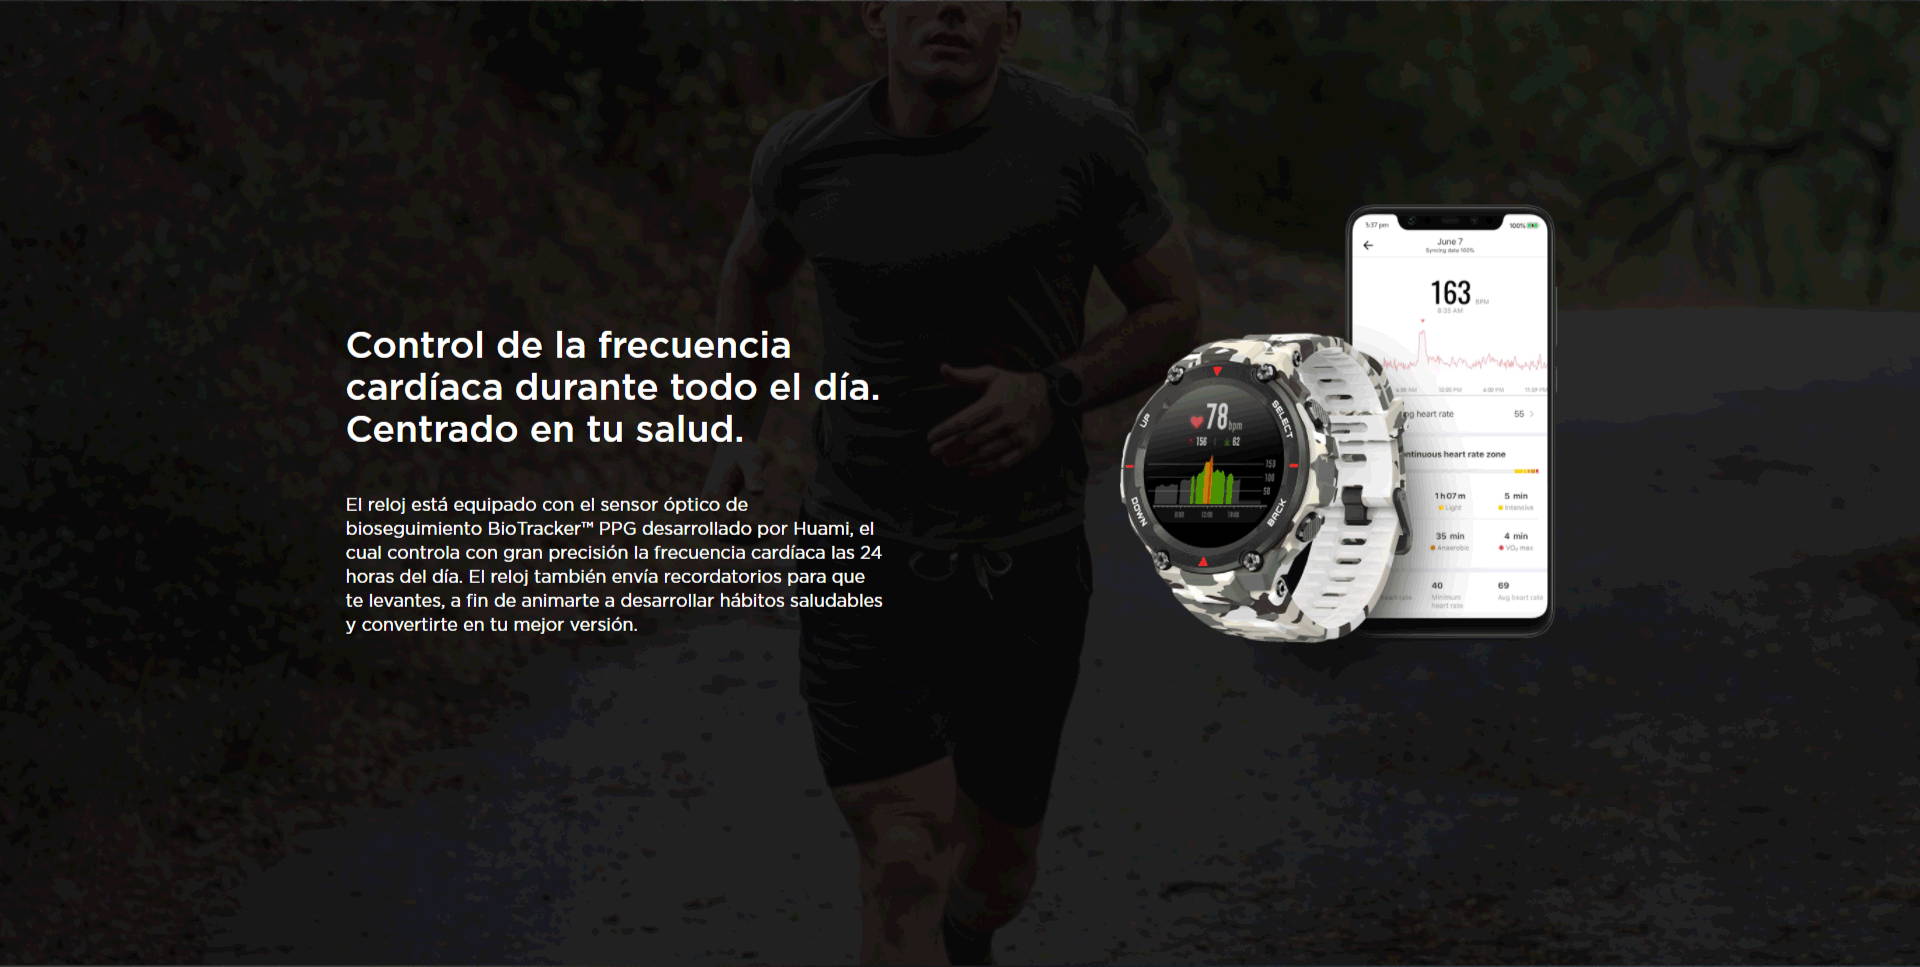 Reloj Militar Hombre Amazfit T rex T-rex Smartwatch Control Music 5ATM  Reloj inteligente GPS/GLONASS 20 días de batería MIL-STD Reloj Inteligente  Hombre - AliExpress